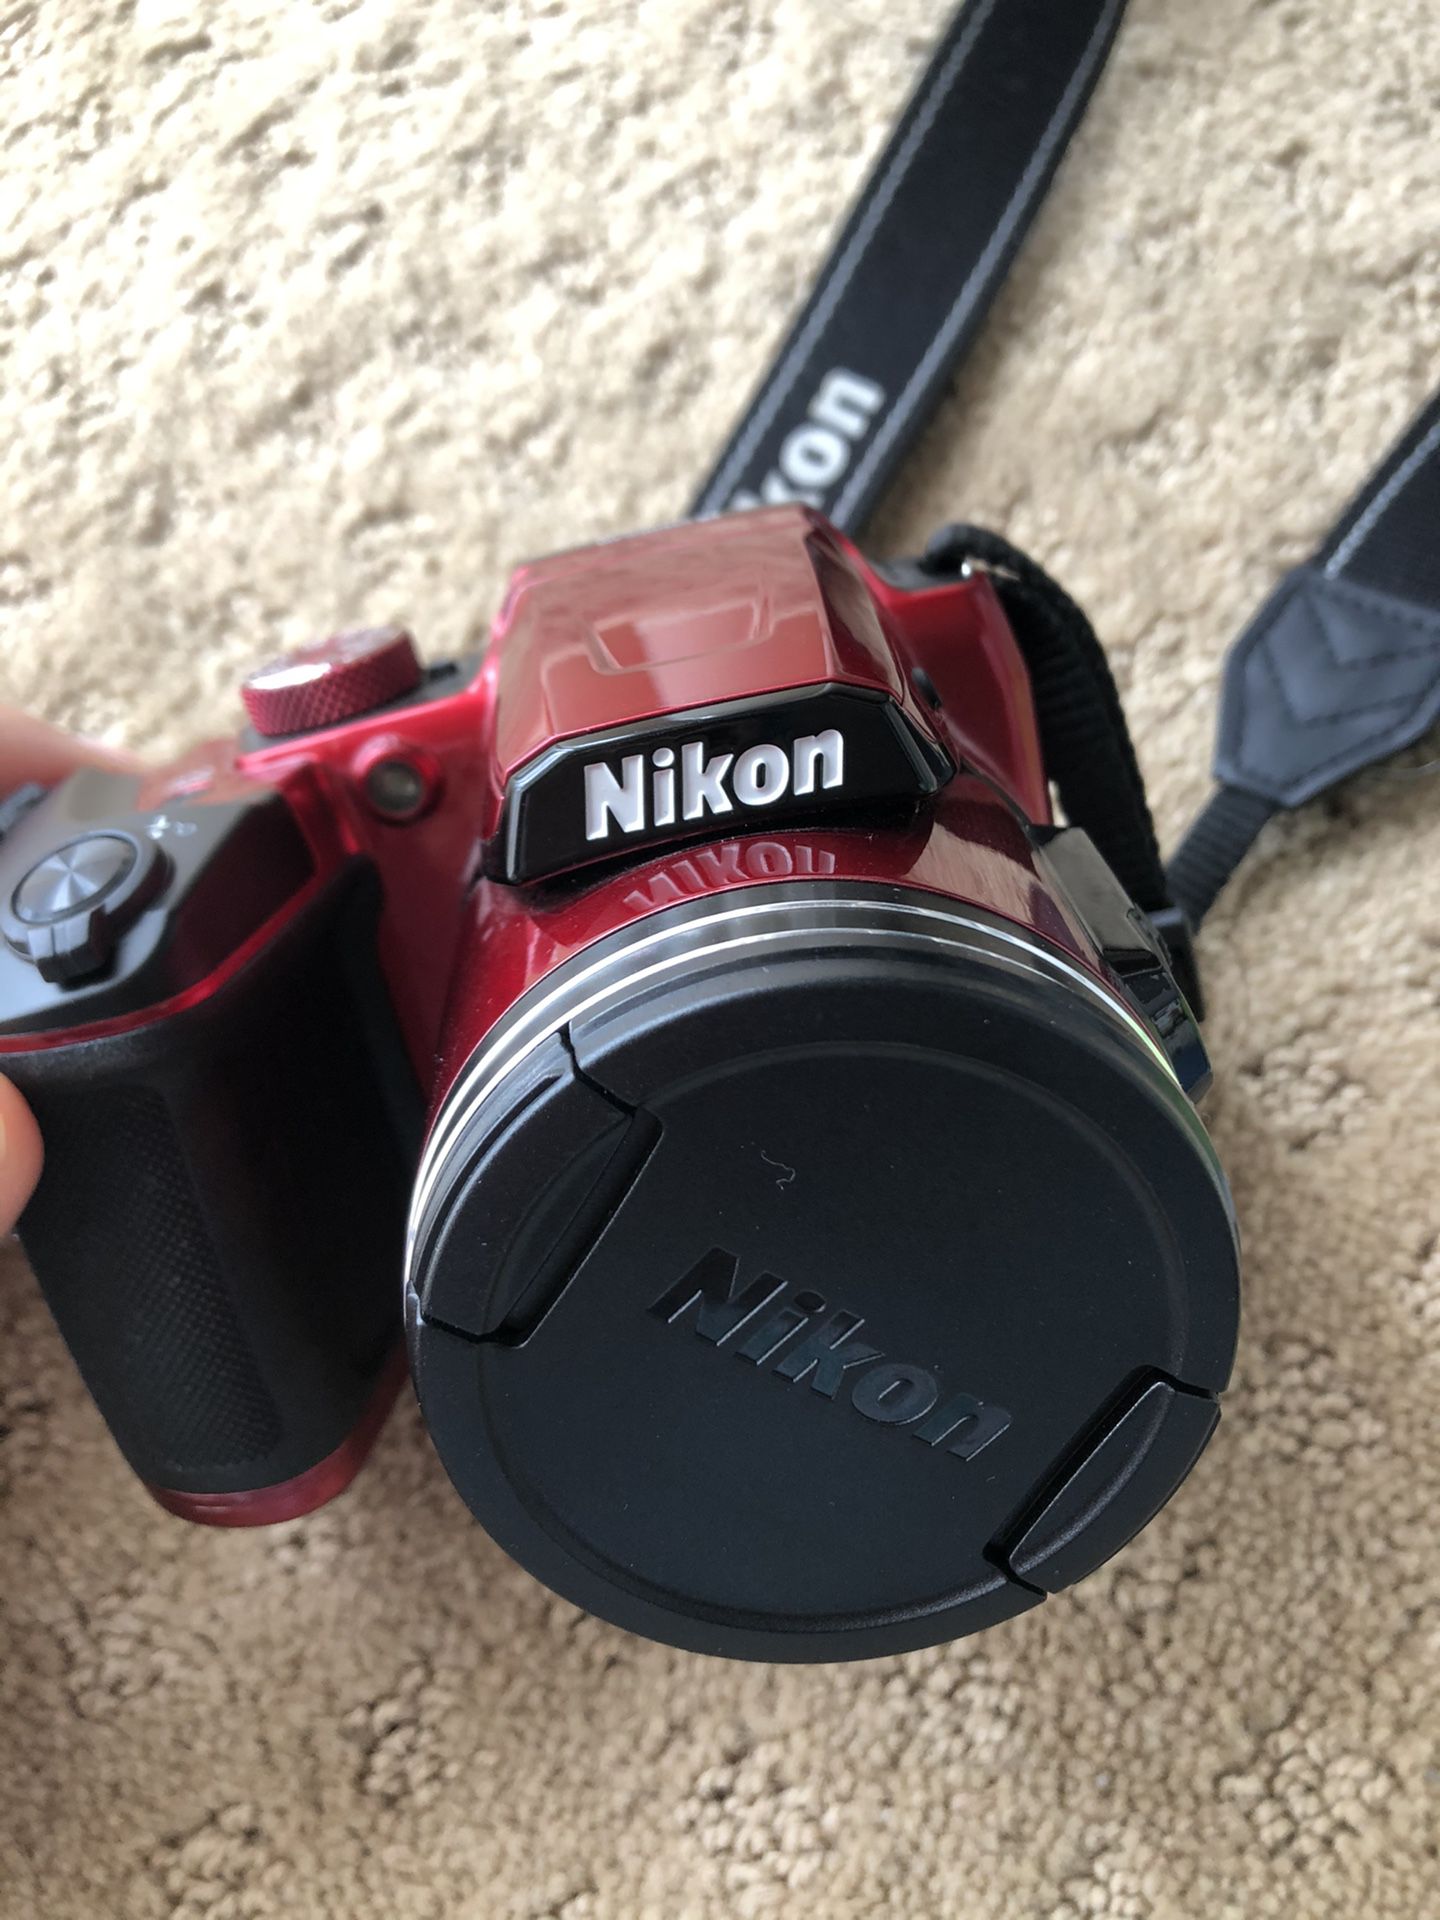 Nikon B500 digital camera